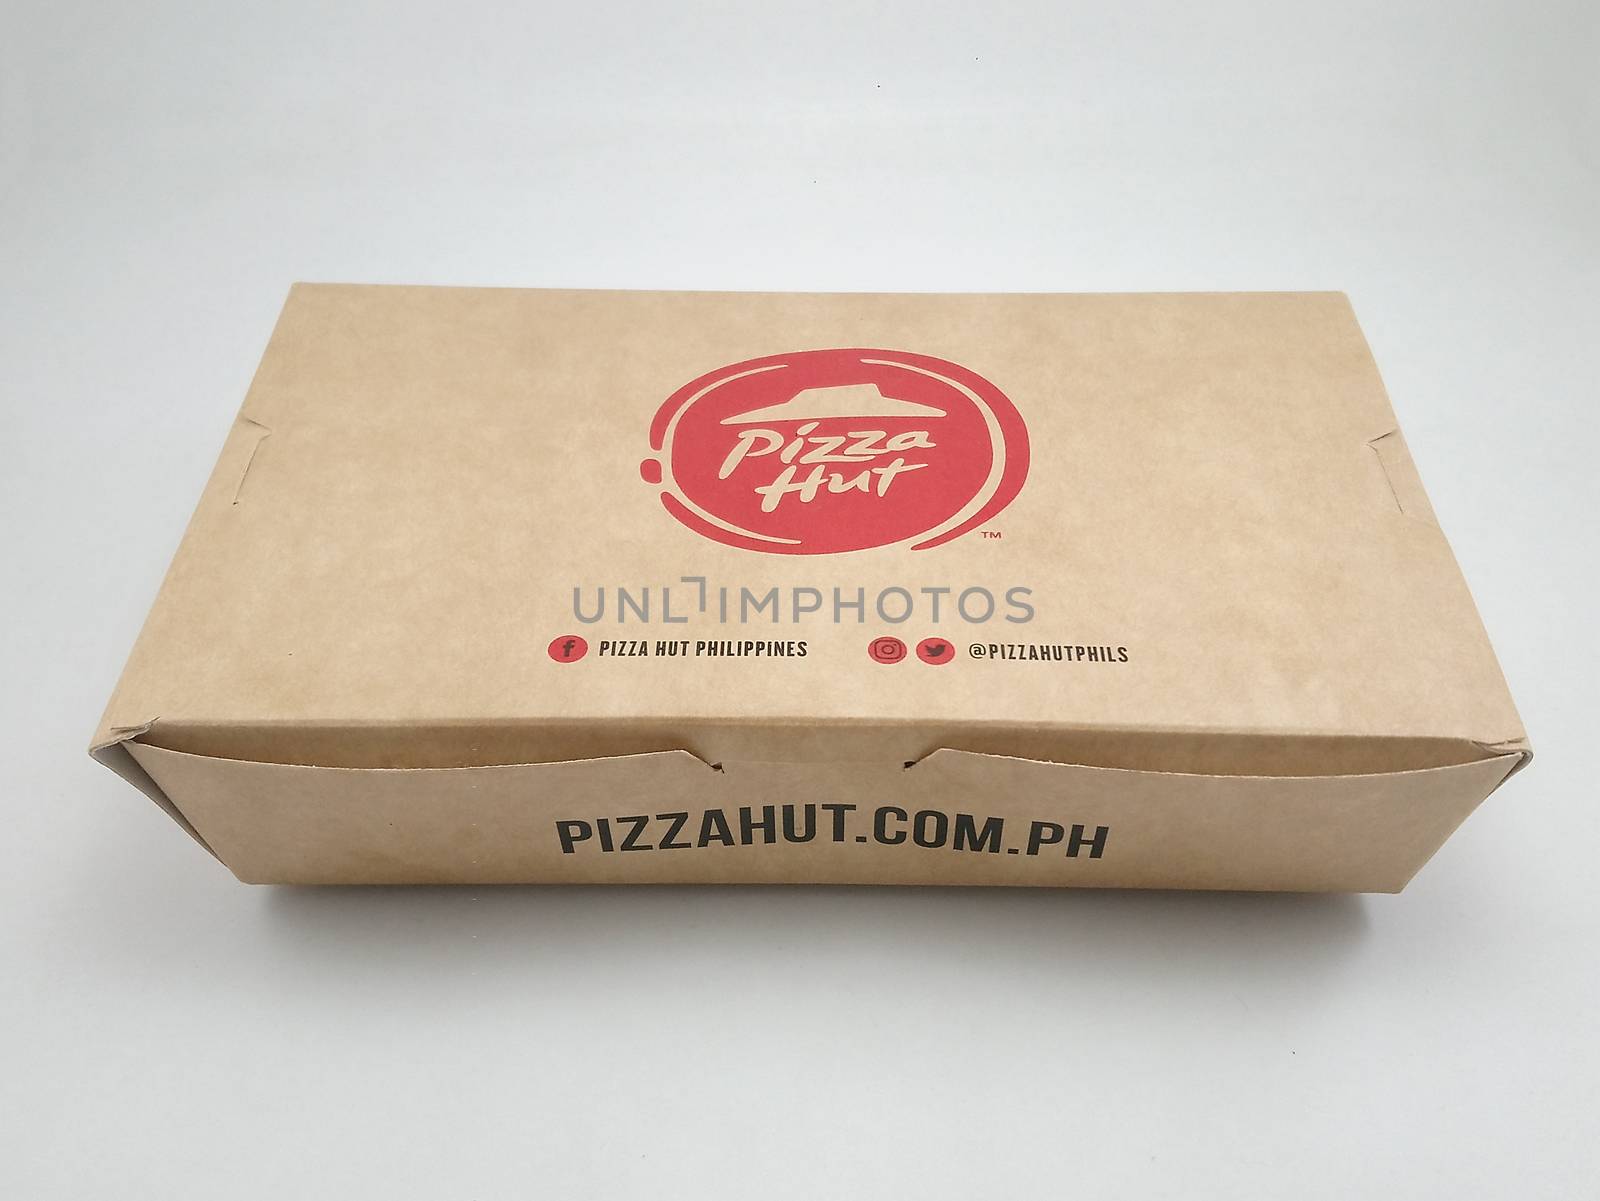 Pizza hut pasta noodle box in Manila, Philippines by imwaltersy